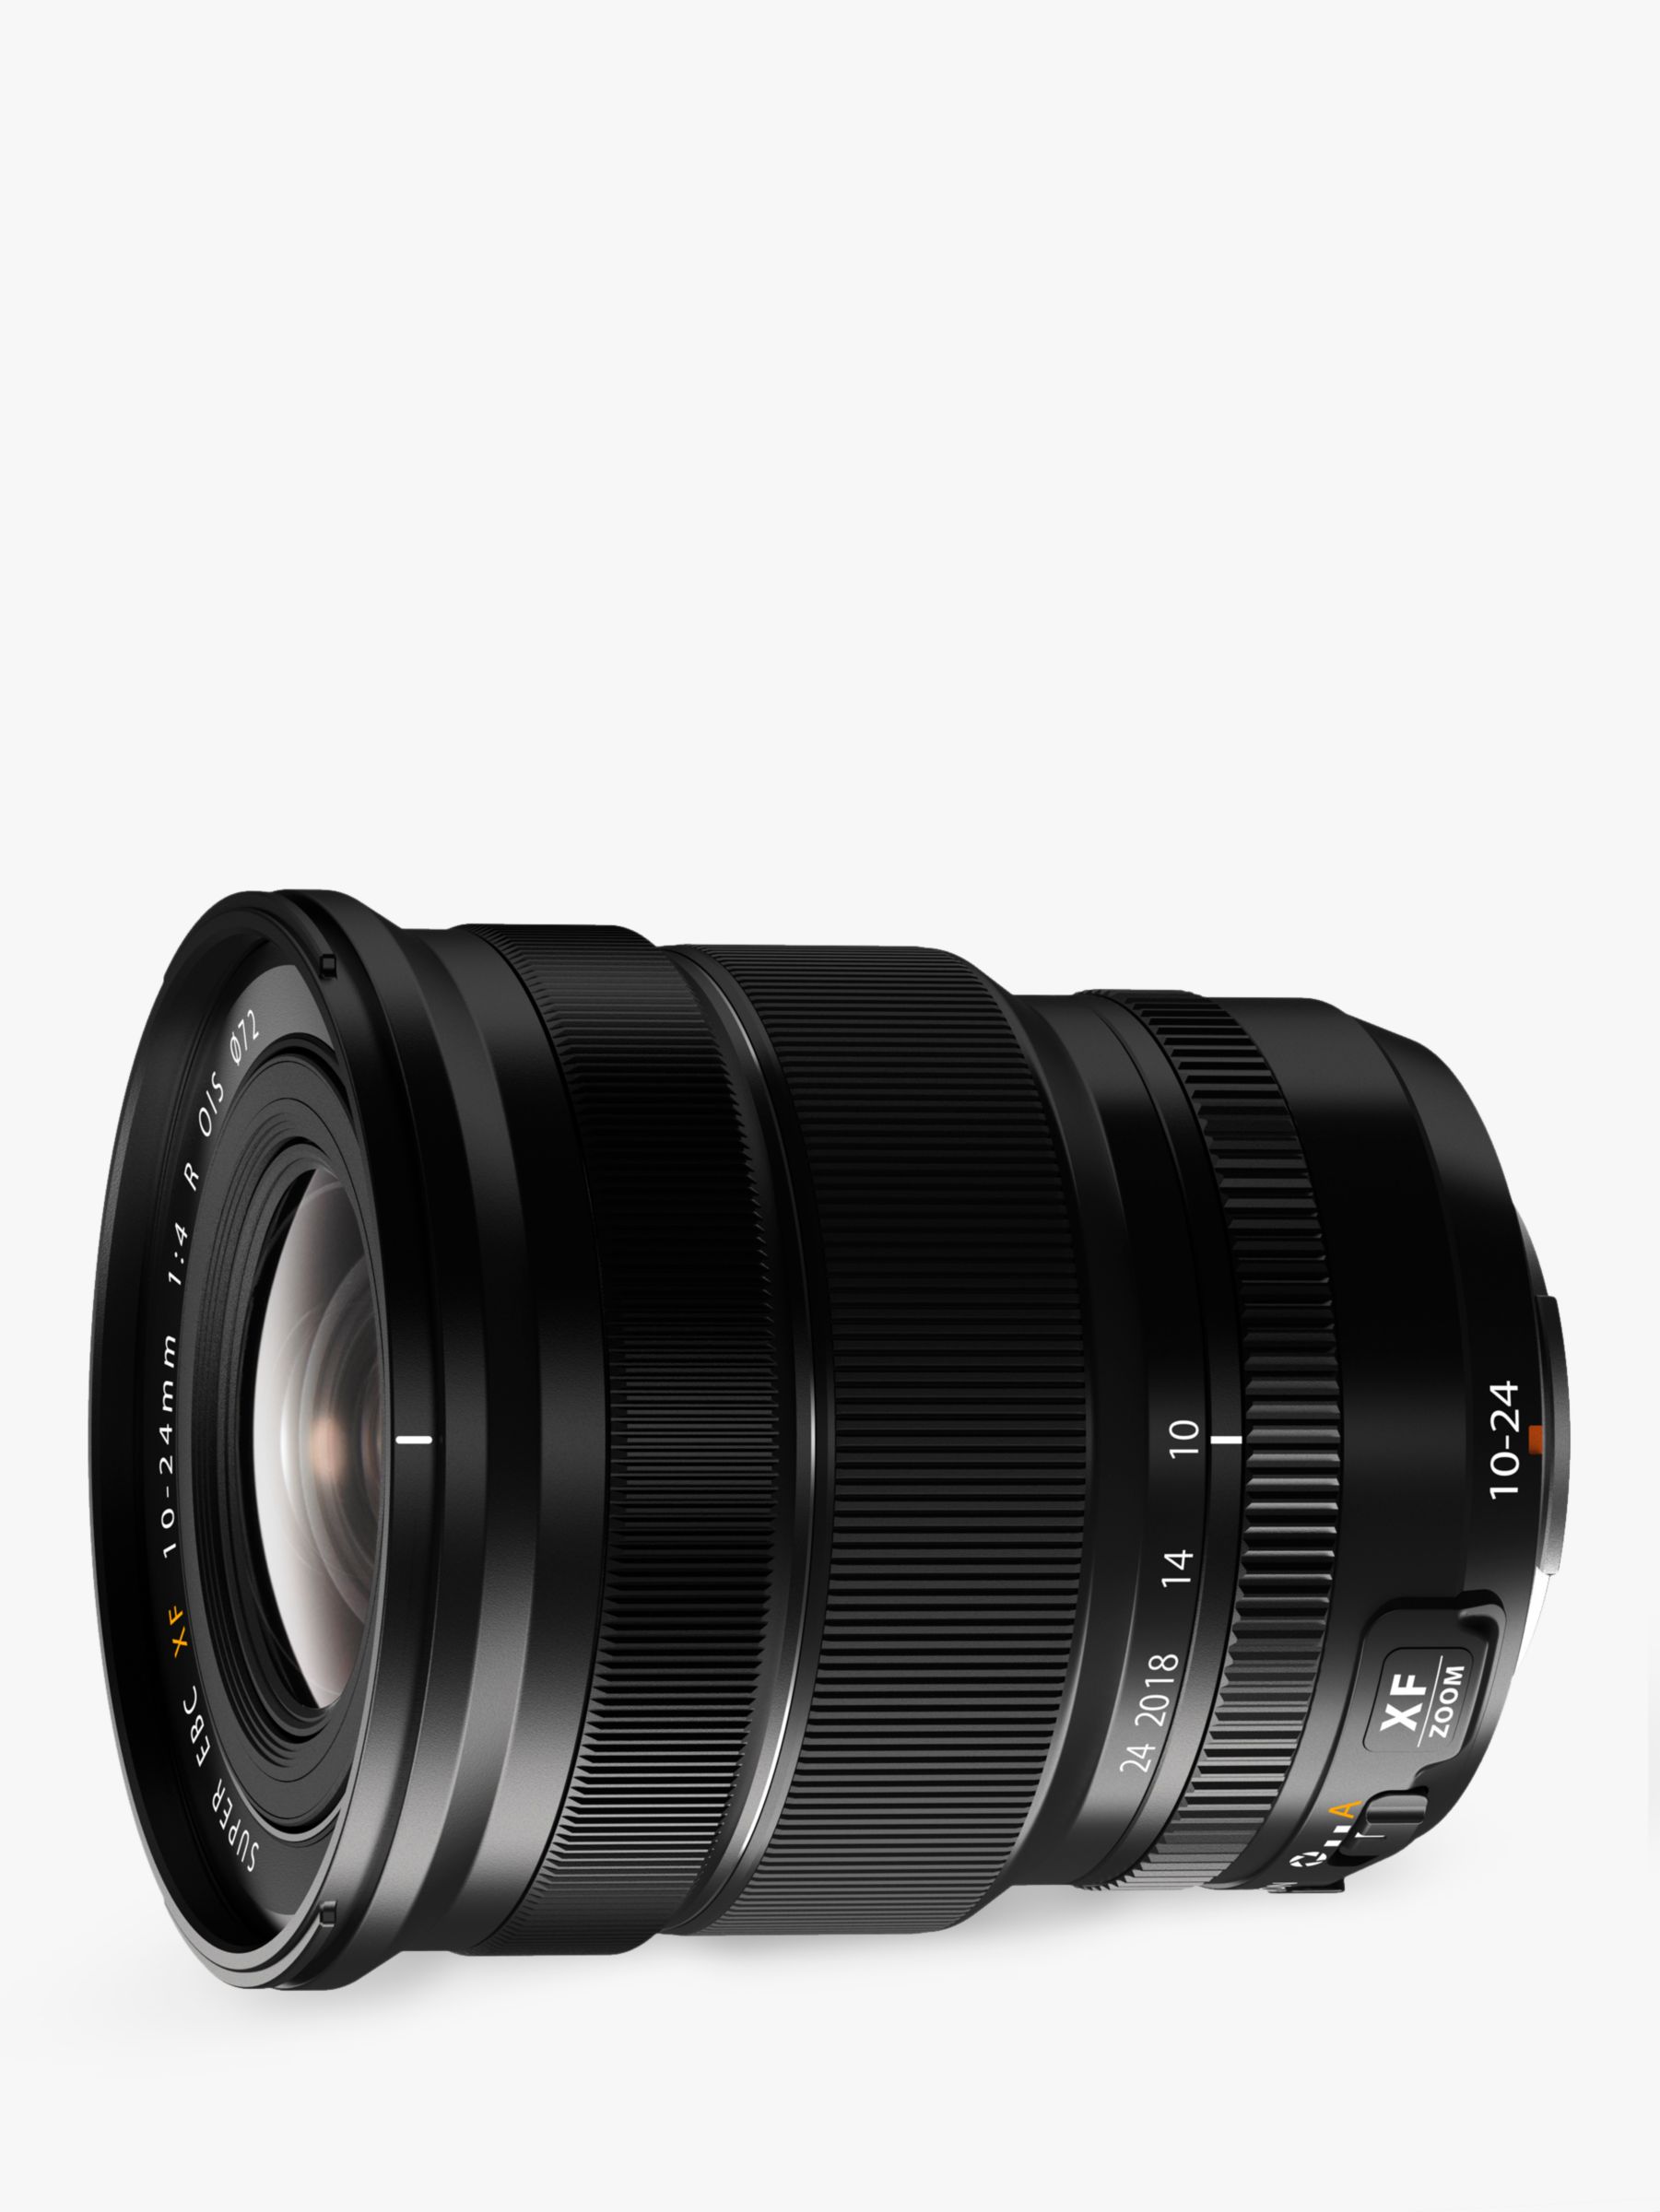 Image of Fujifilm XF1024mm f4 R OIS Ultra WideAngle Lens